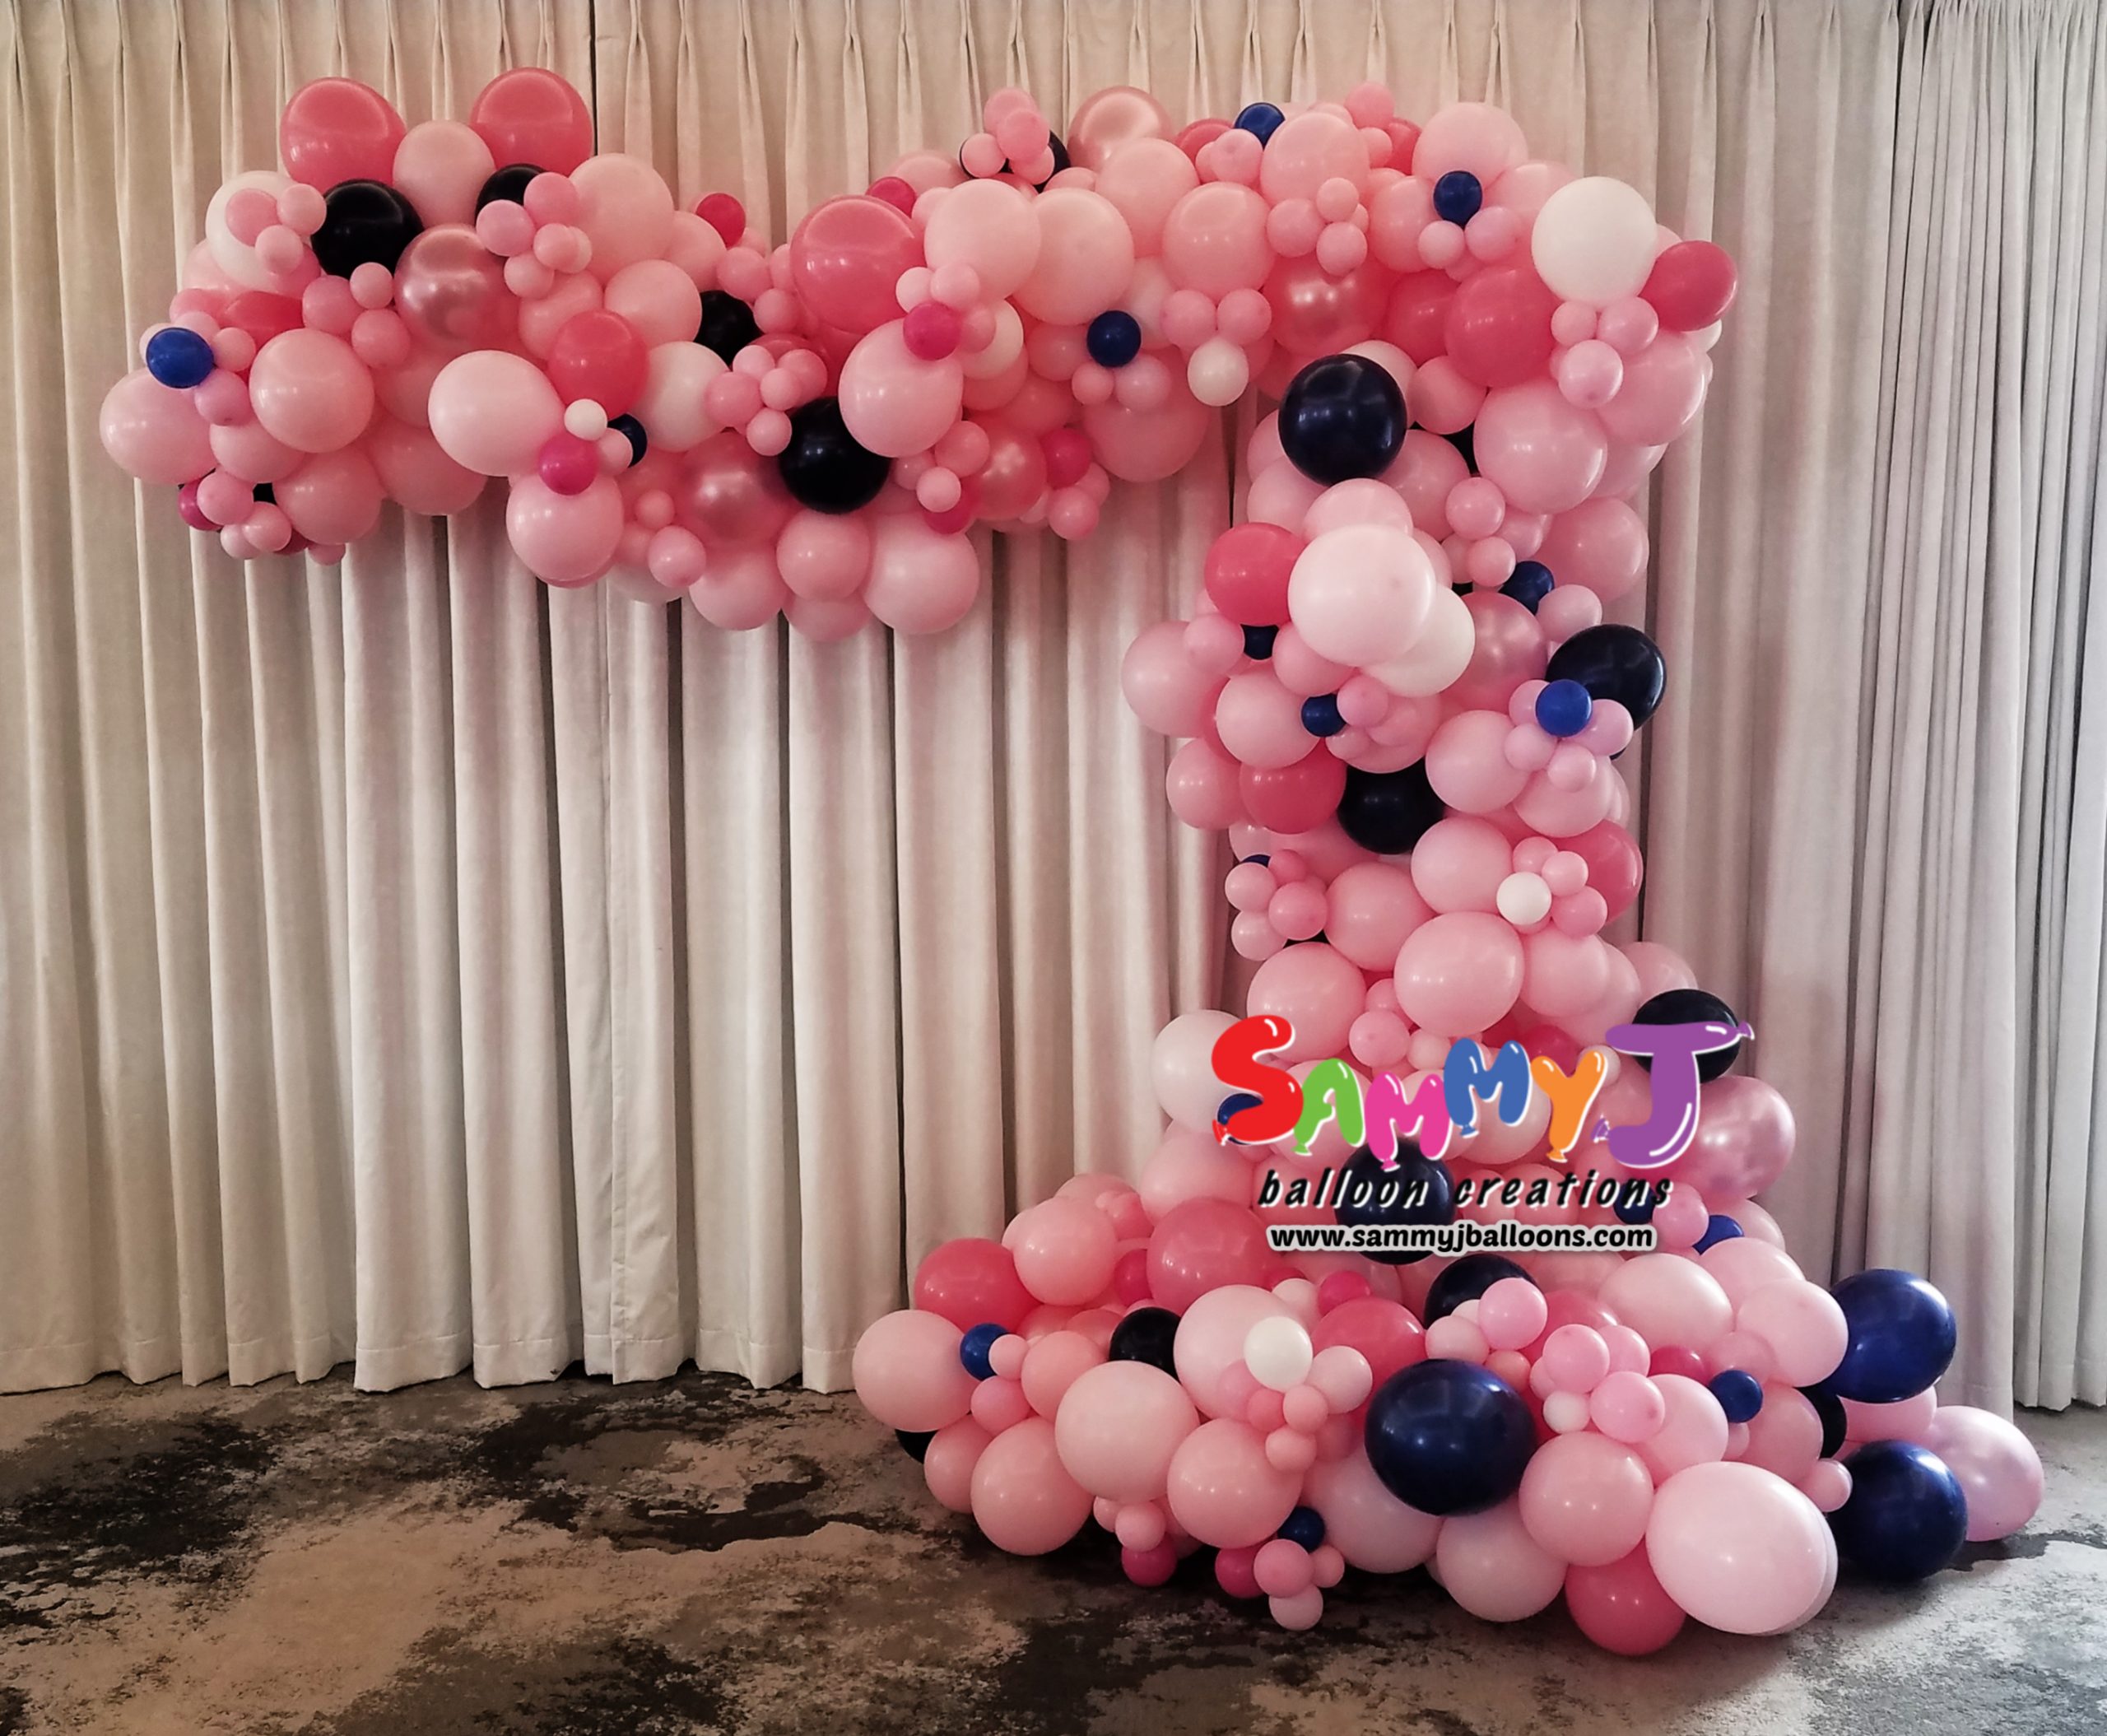 SAMMY J Balloon Creations st louis balloons organic demi arch